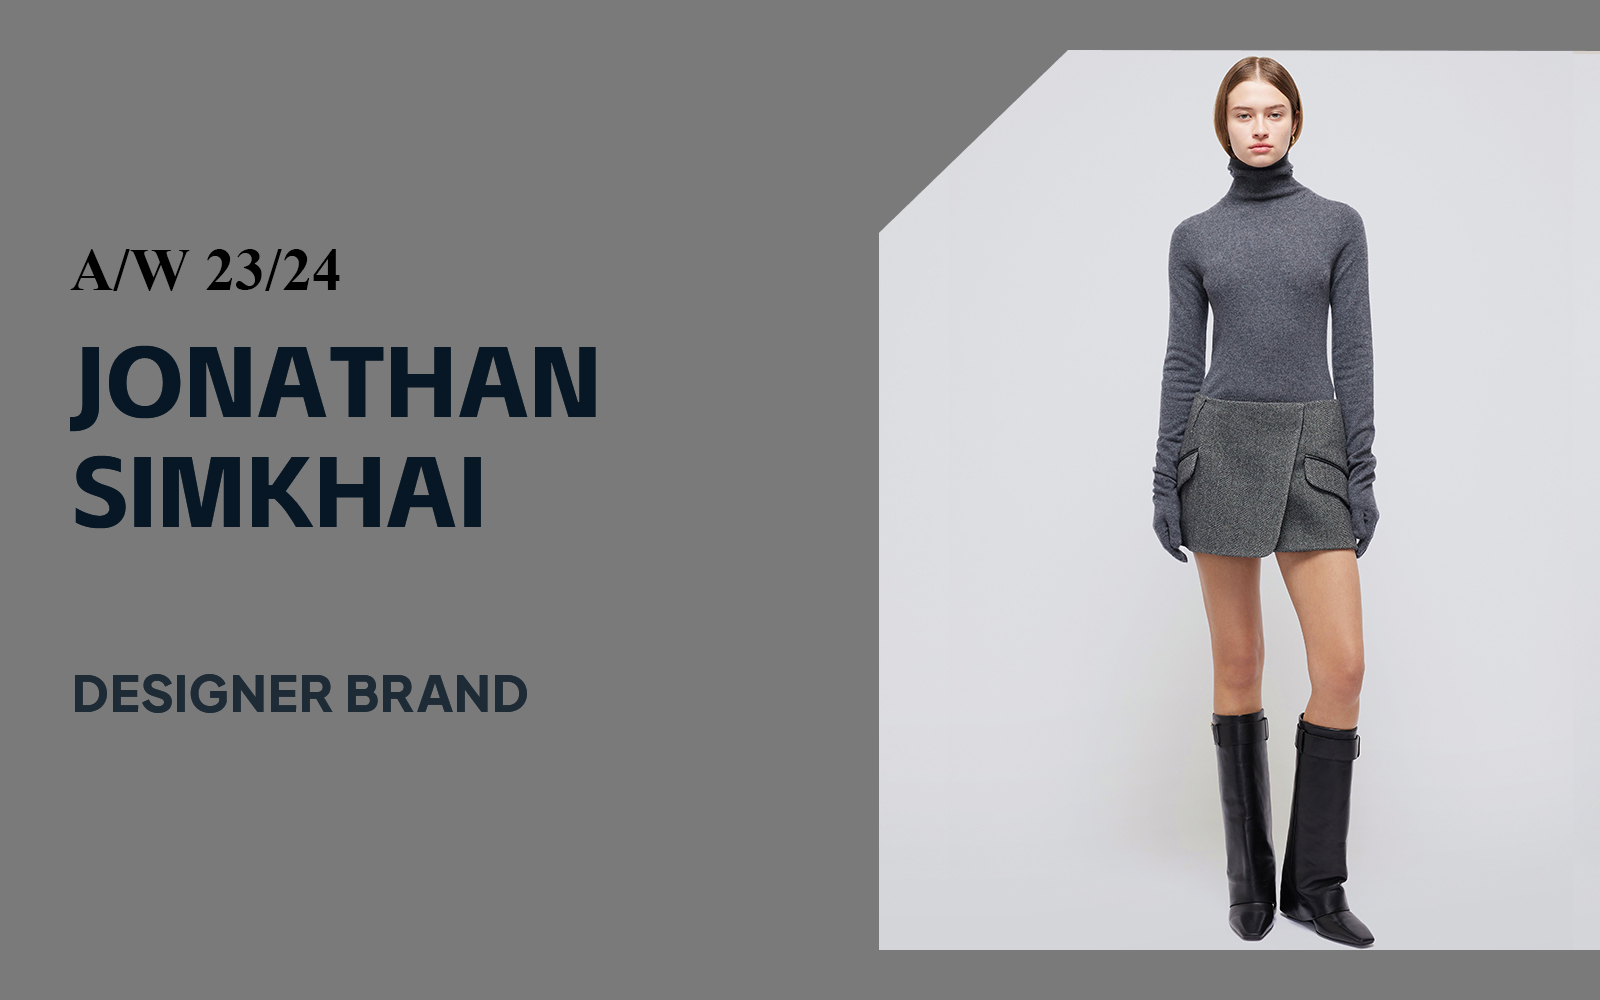 Elegant and Sexy -- The Analysis of Jonathan Simkhai The Womenswear Designer Brand